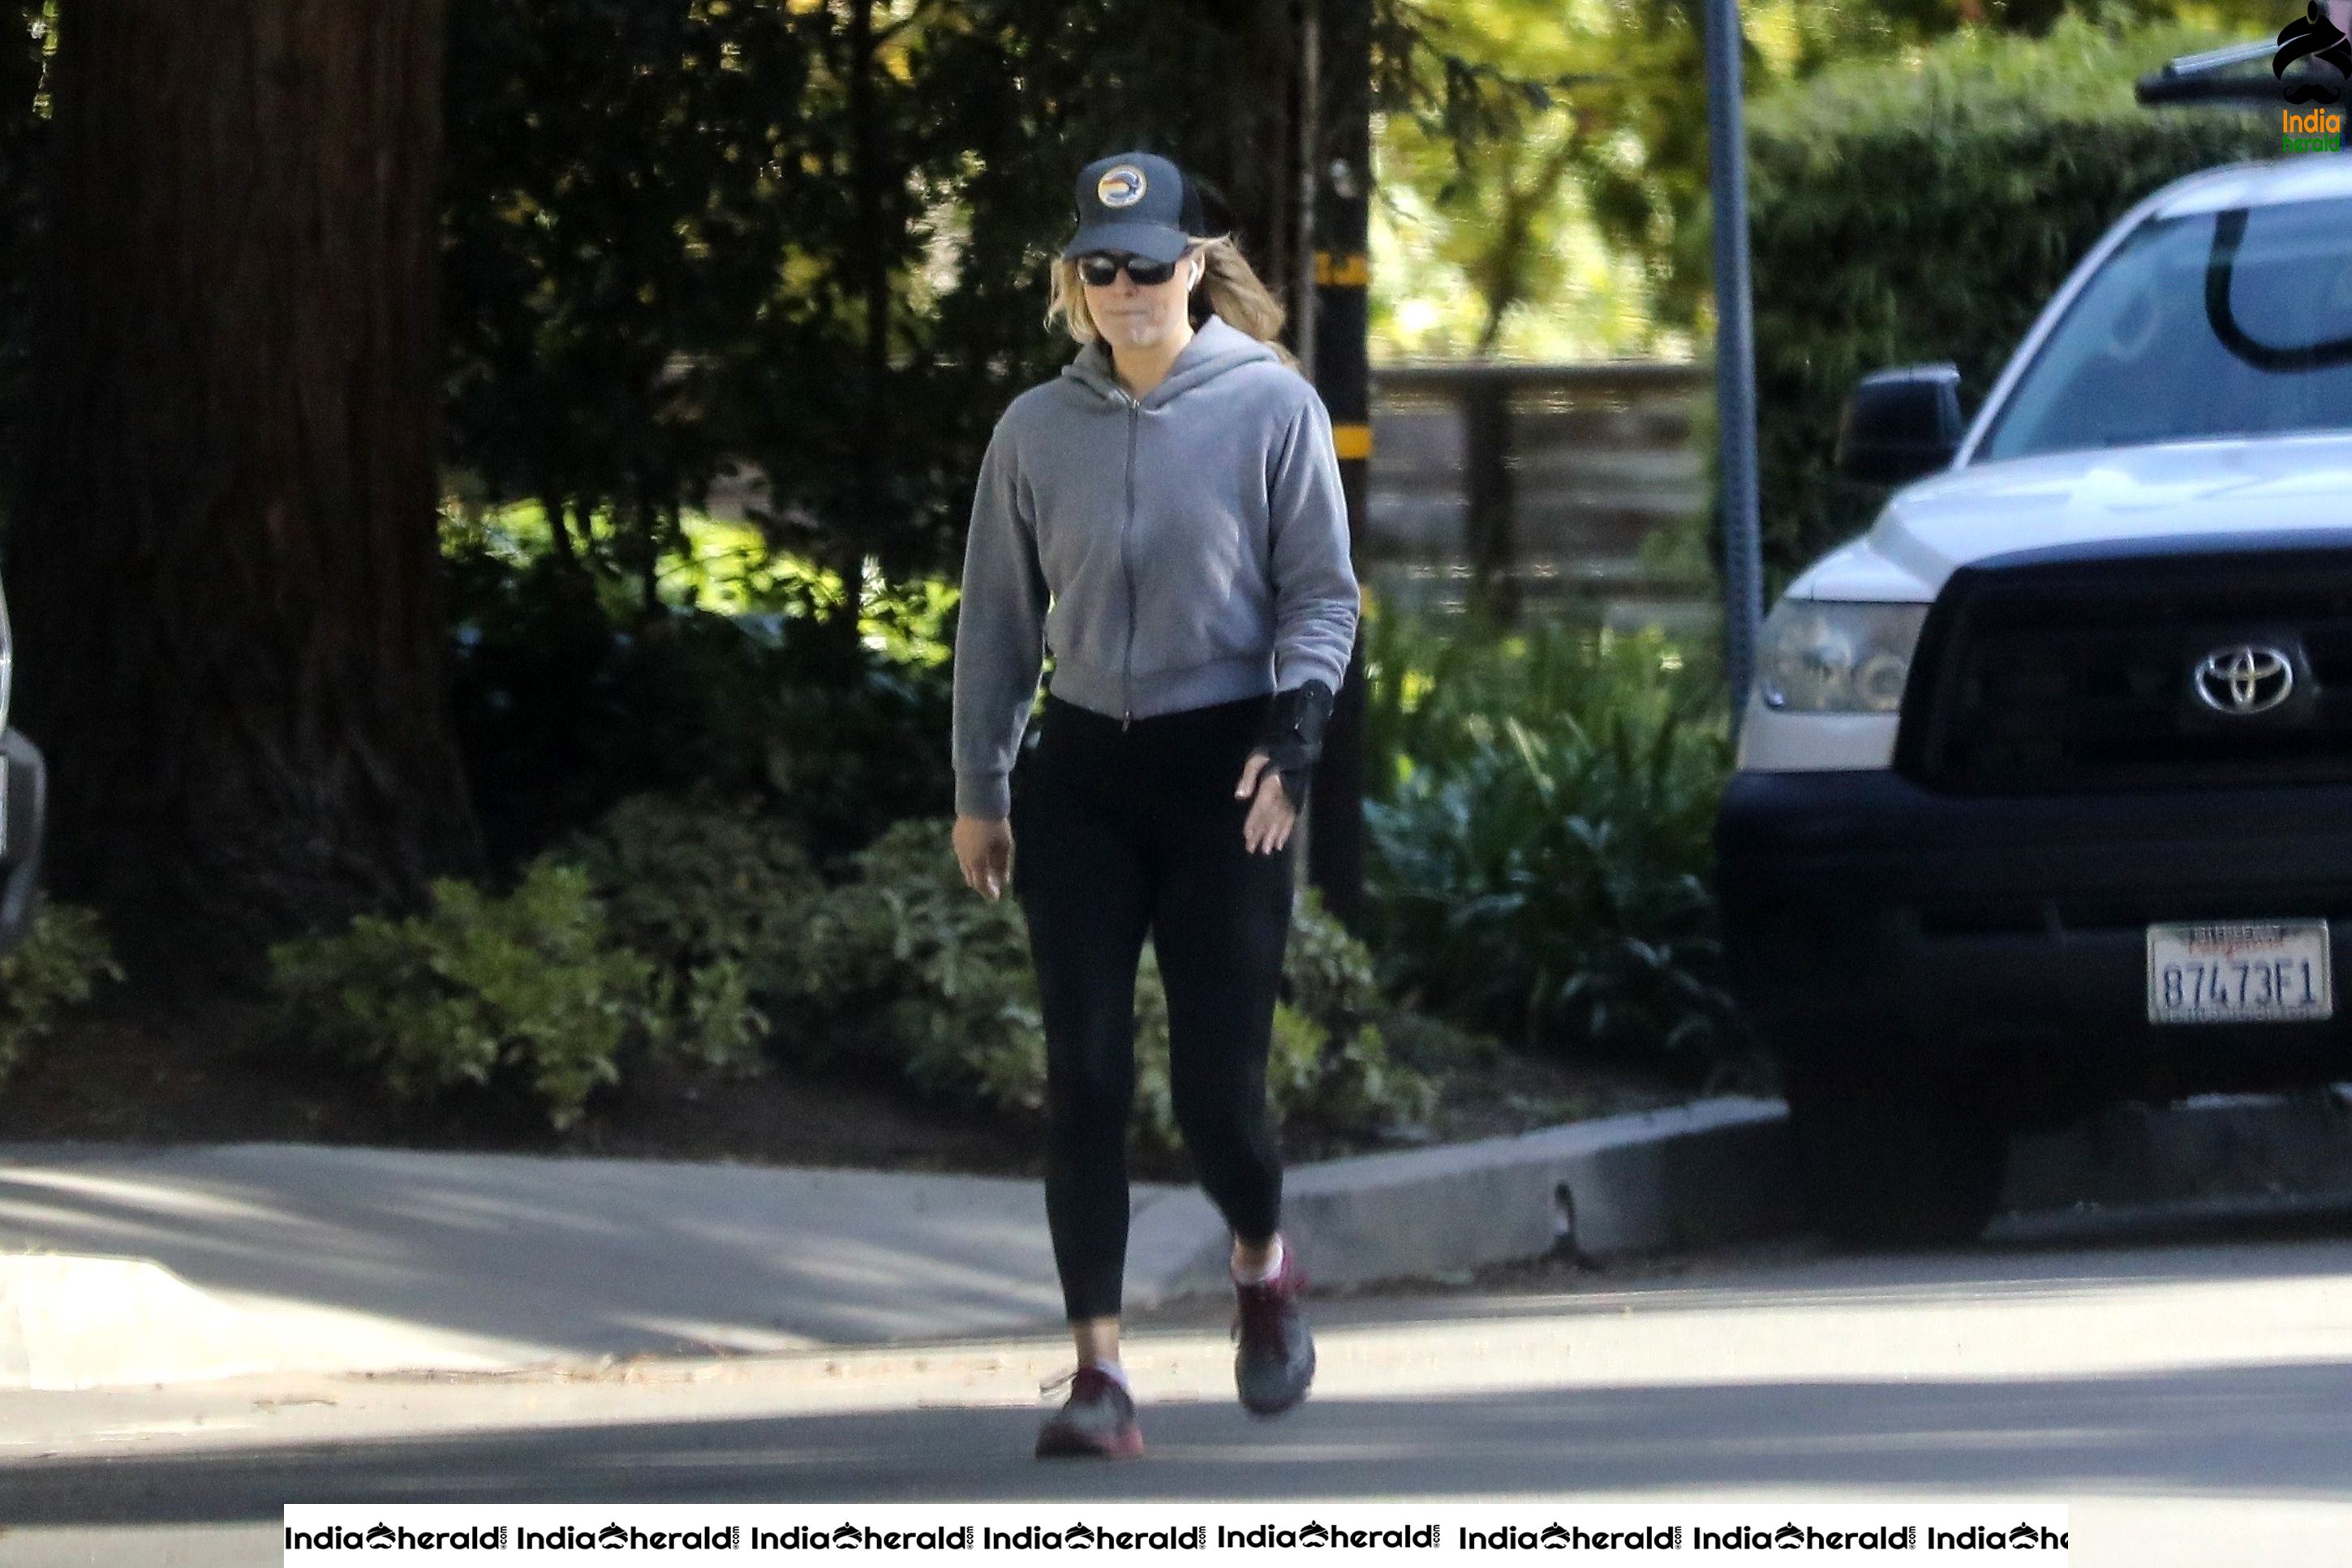 Ali Larter out for a walk in Santa Monica amid Corona Virus outbreak